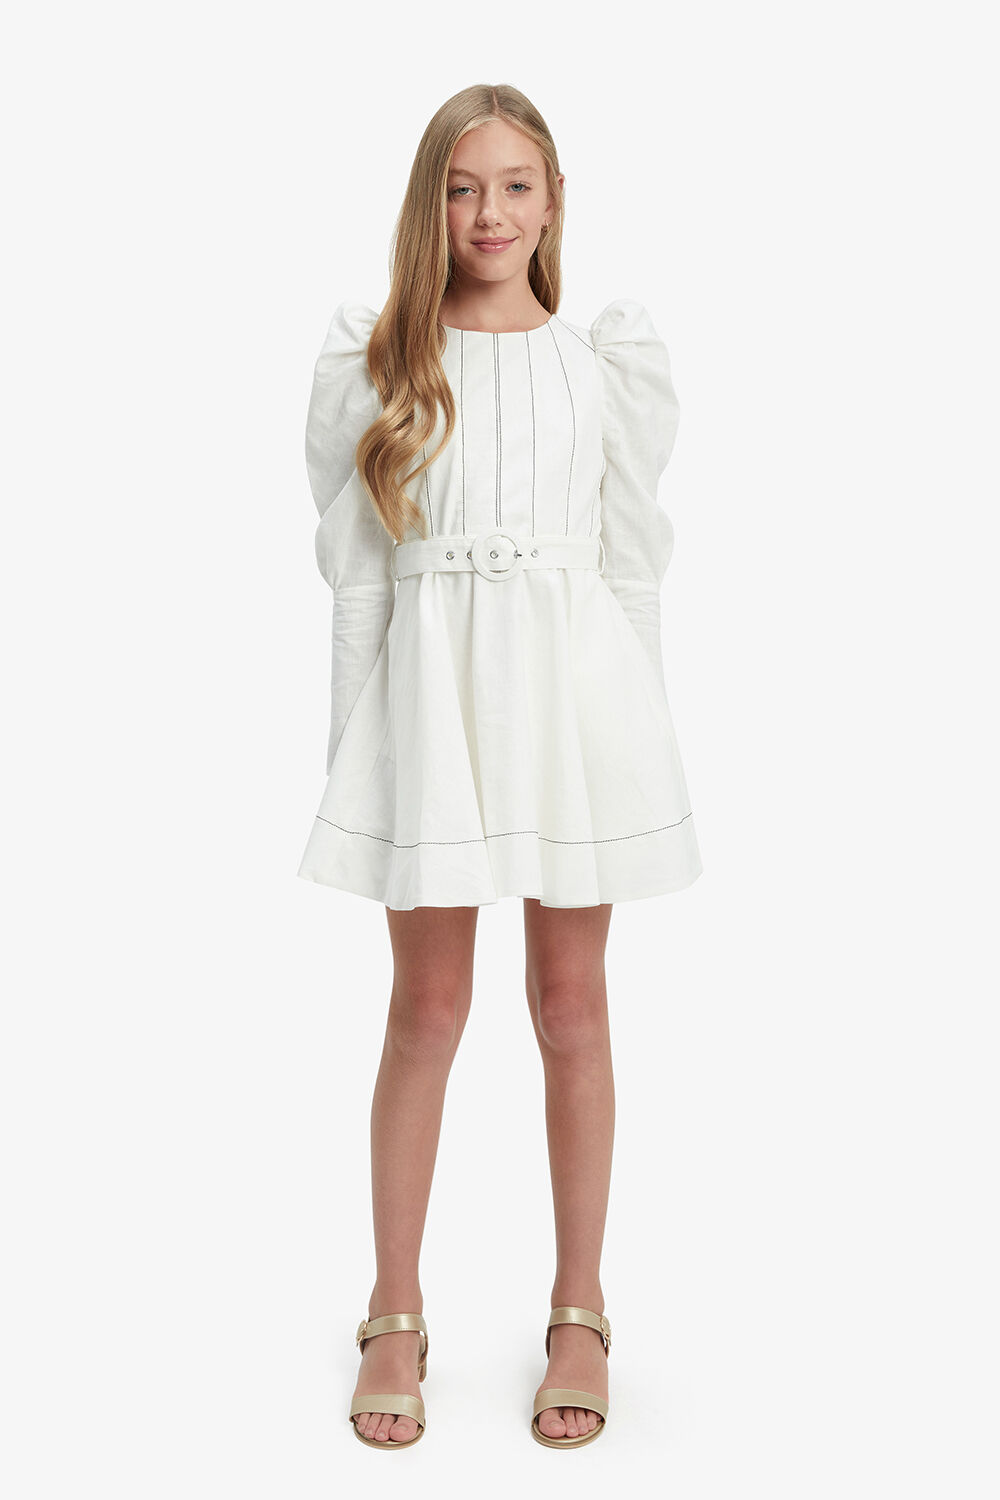 ZETA PUFF SLEEVE DRESS in colour BRIGHT WHITE